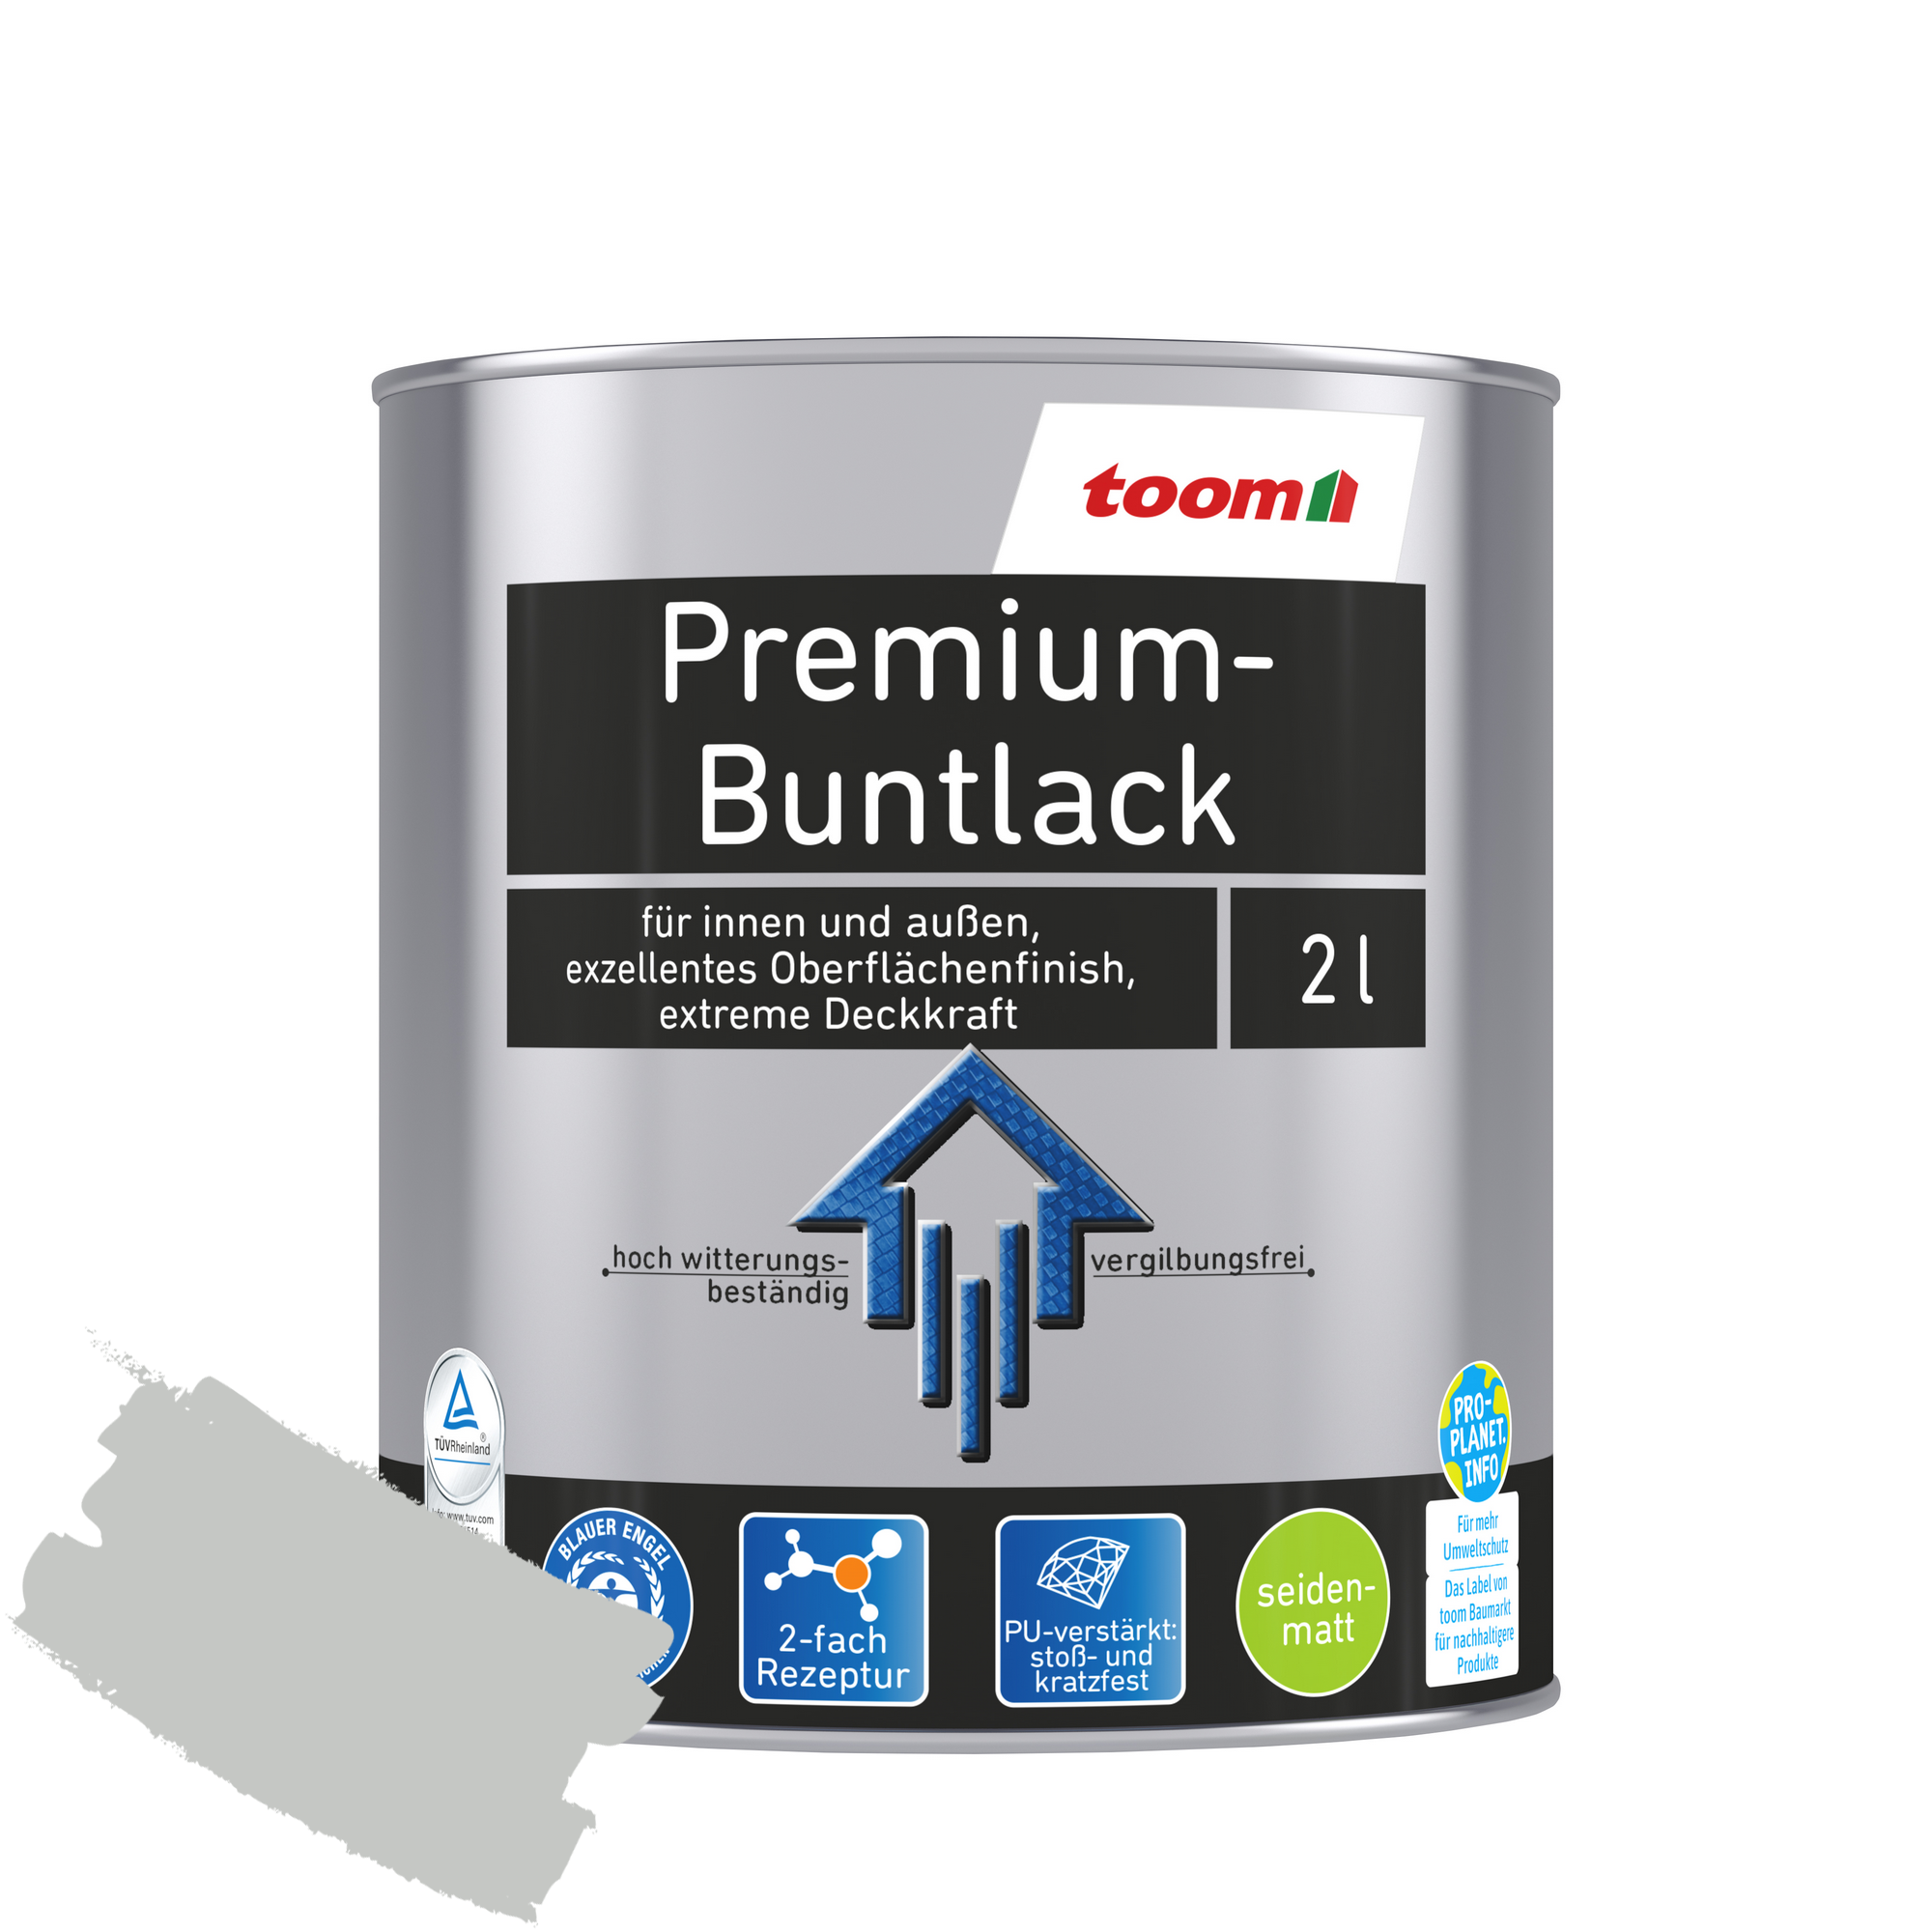 Premium-Buntlack lichtgrau seidenmatt 2 l + product picture